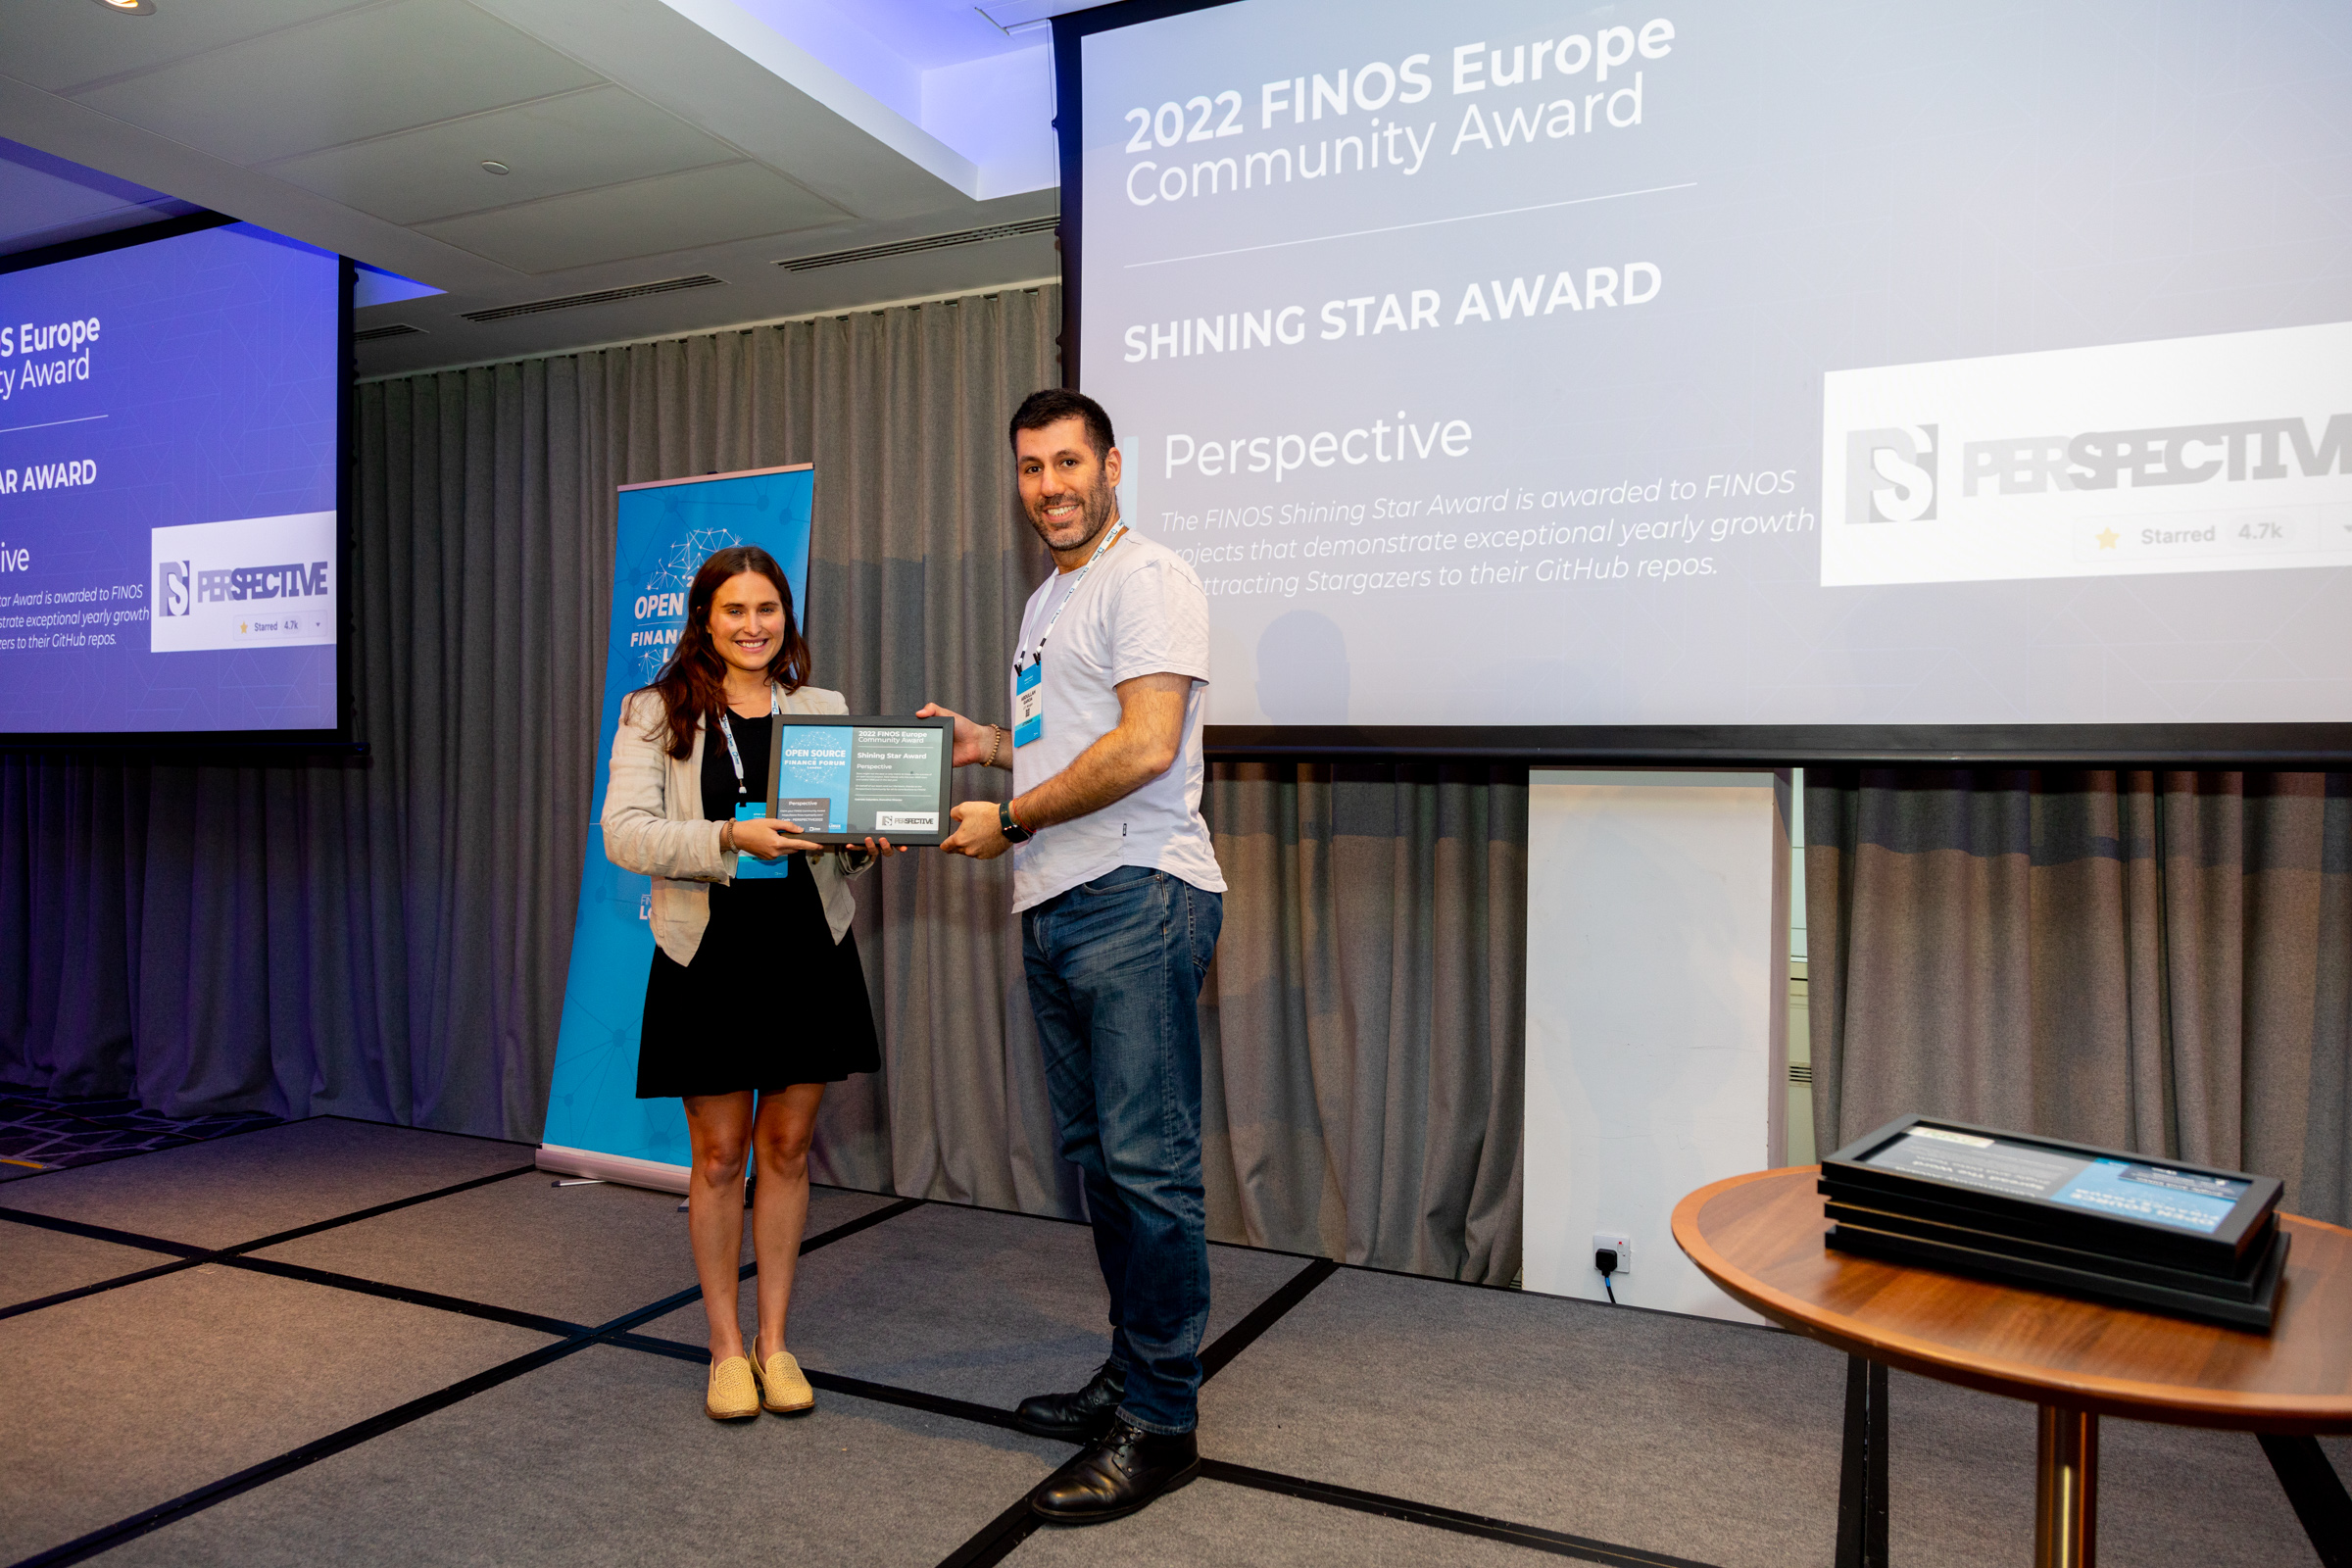 2022 FINOS Europe Community Award – Shining Star Award